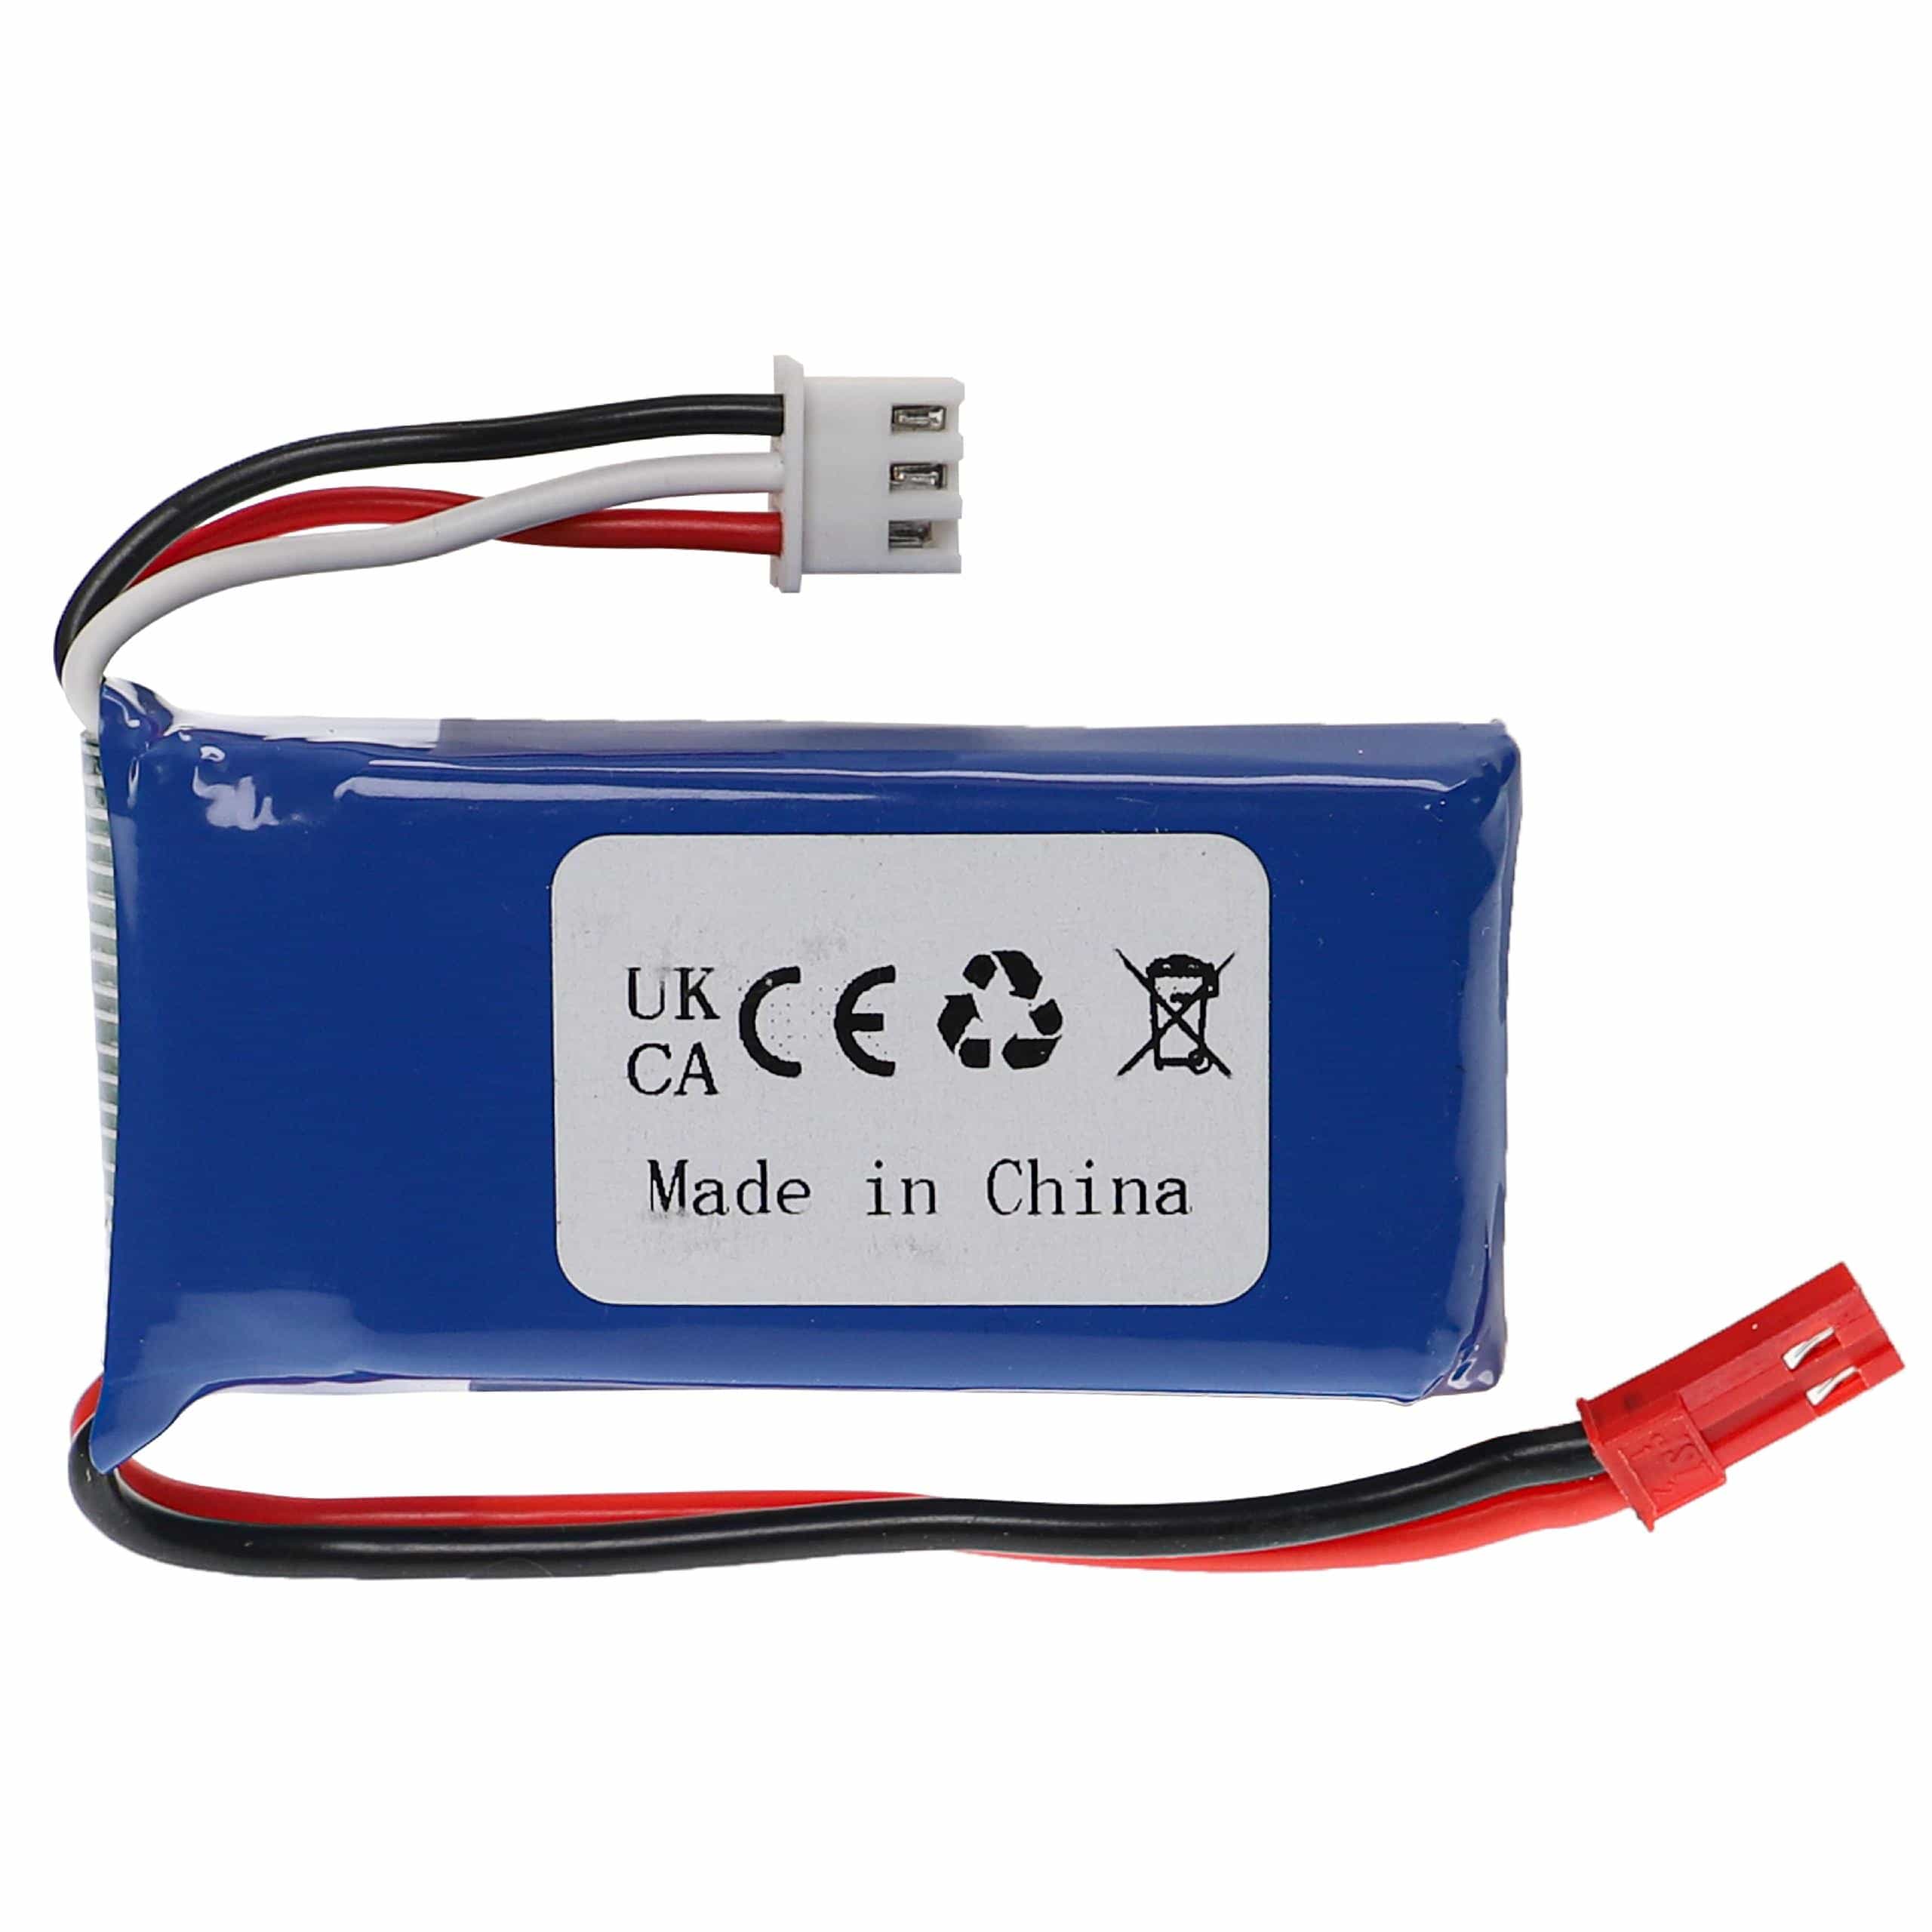 Akumulator do modeli zdalnie sterowanych RC - 1200 mAh 7,4 V LiPo, BEC